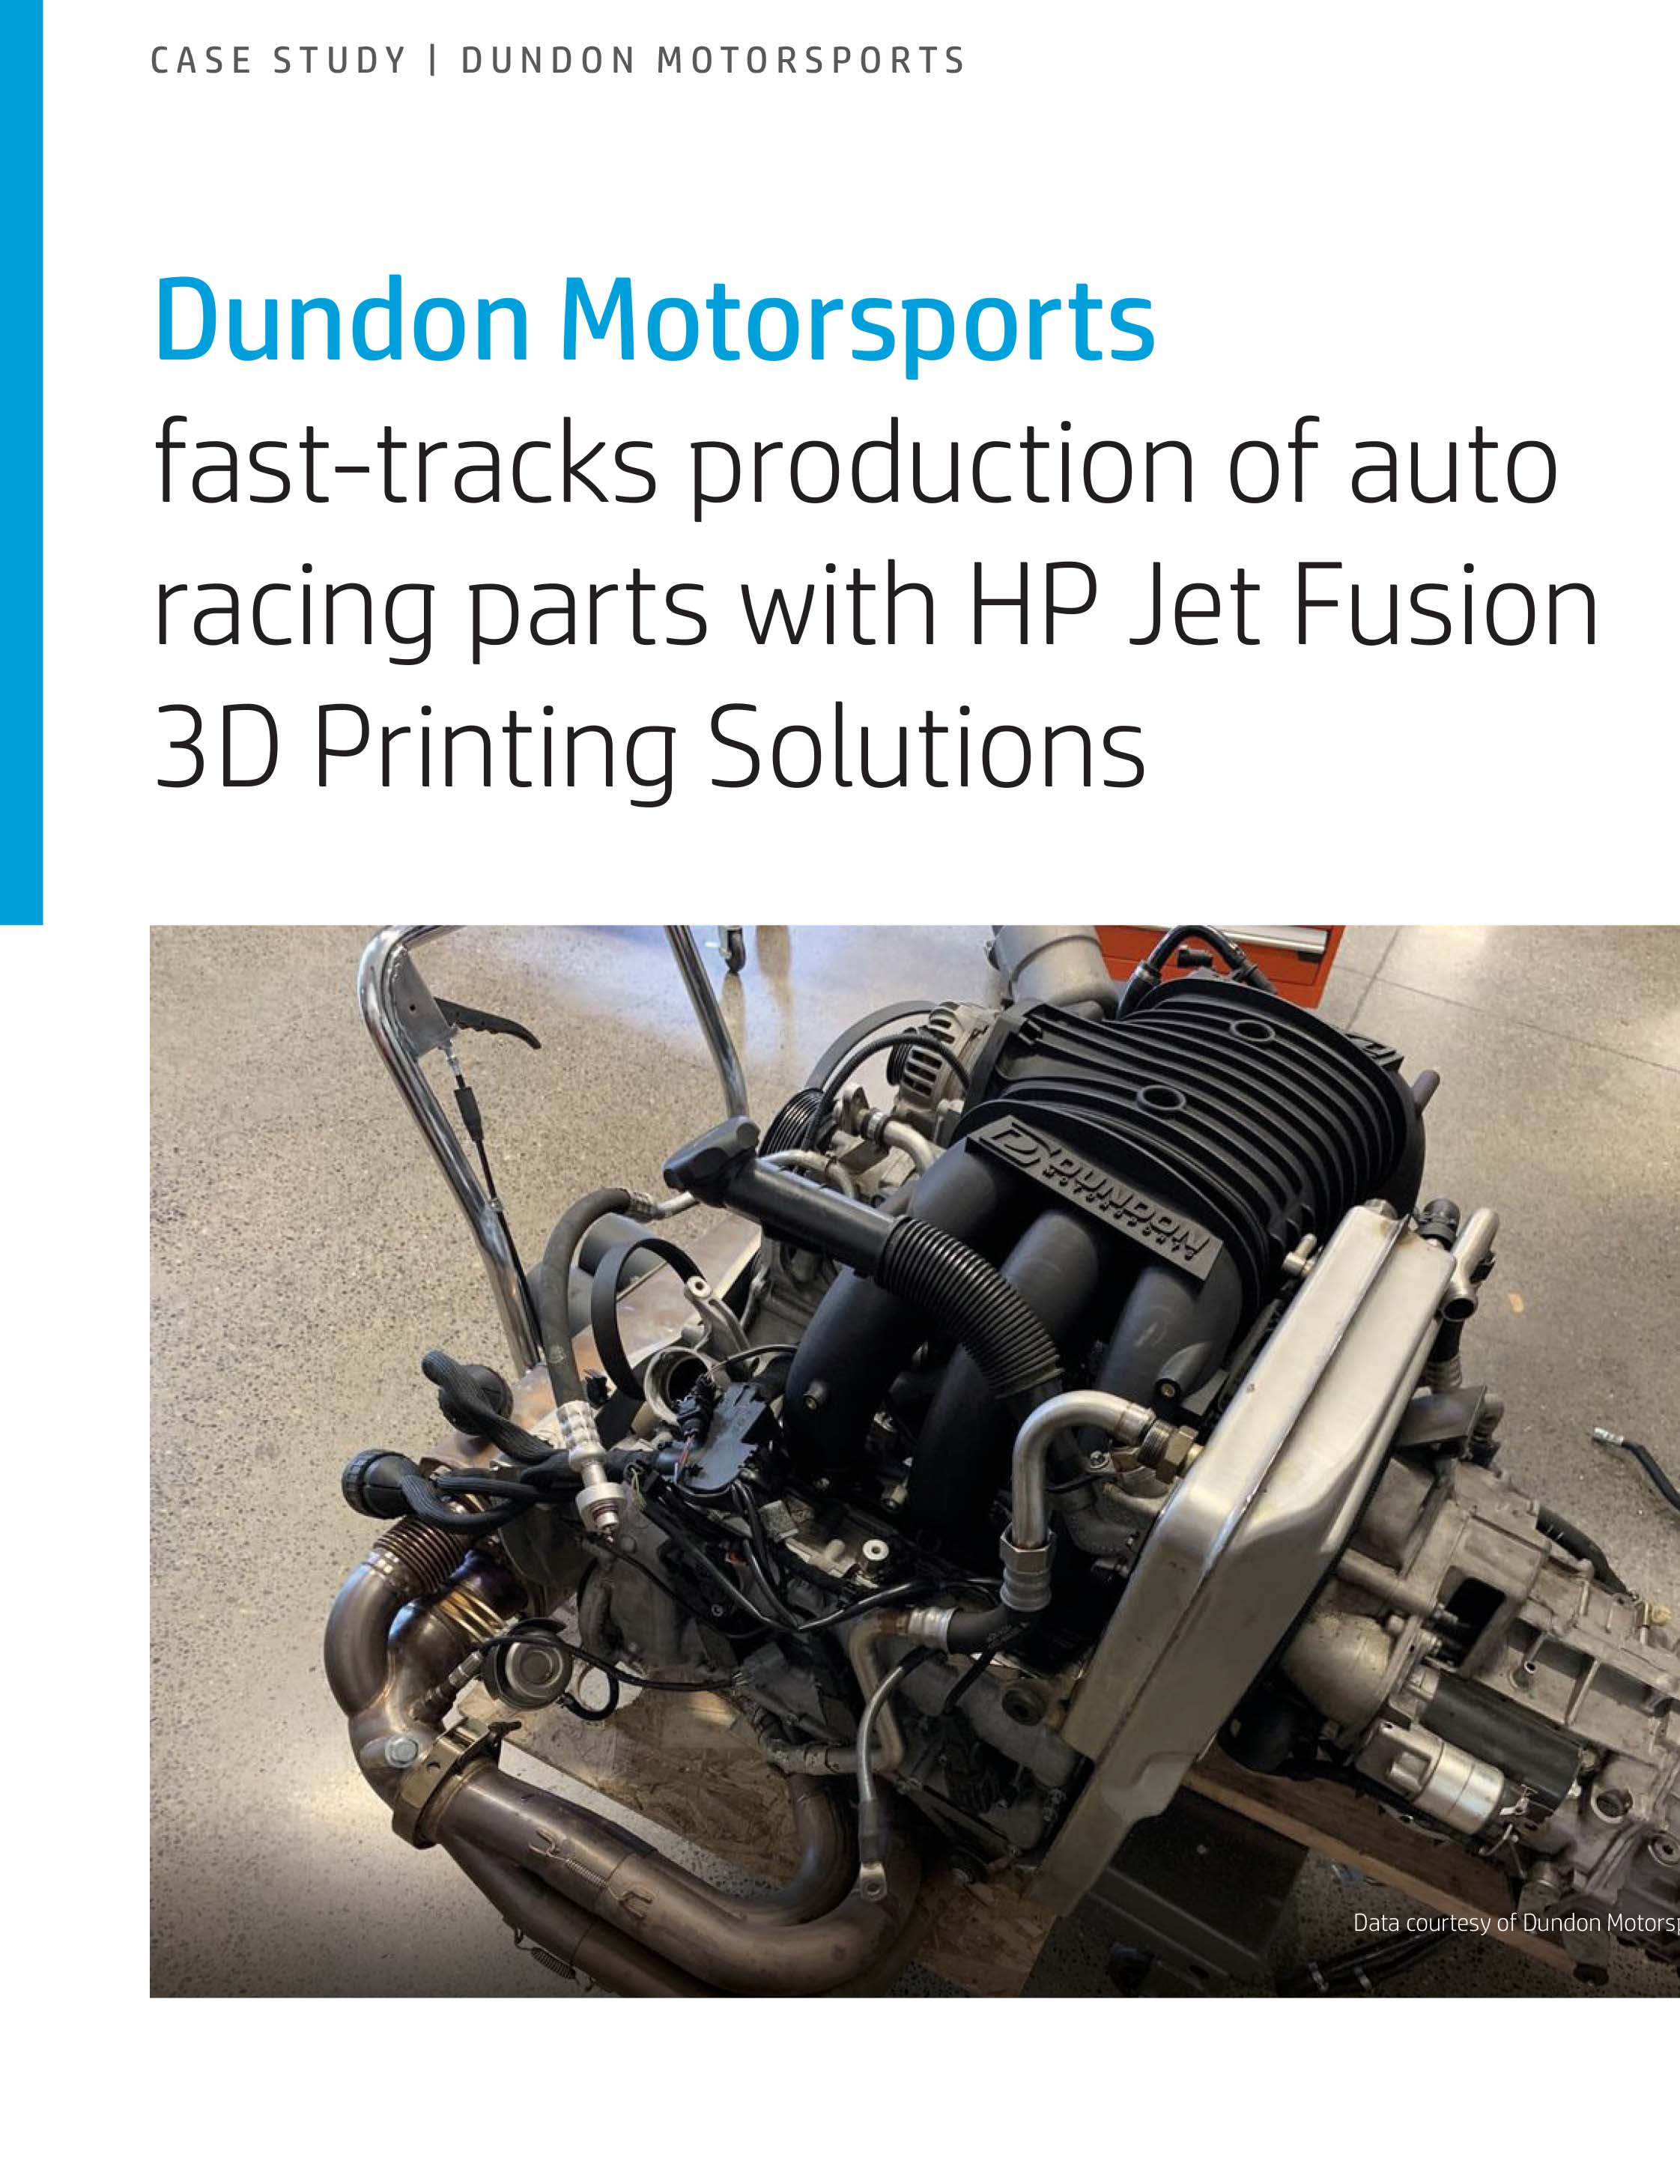 Dundon Motorsports Case Study